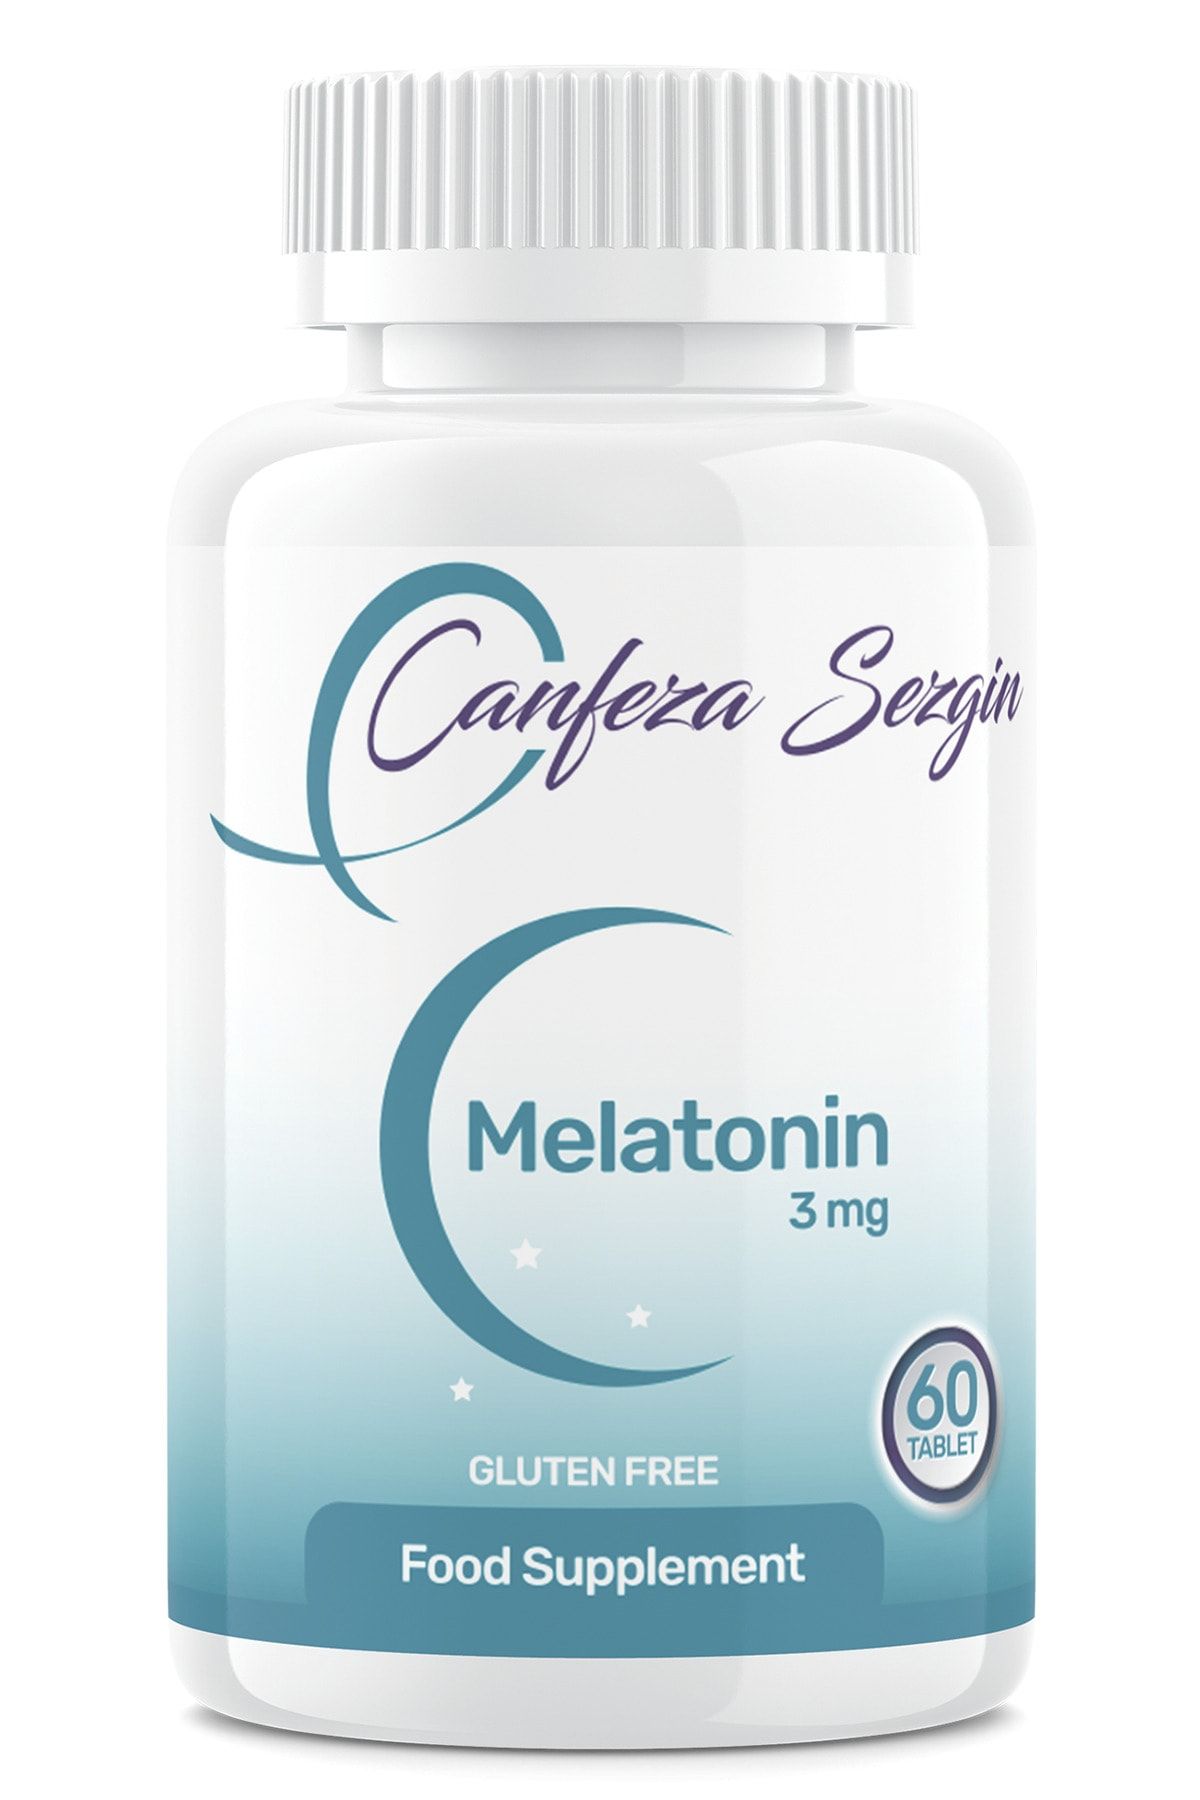 Canfeza Sezgin Melatonin 3 mg 60 Tablet